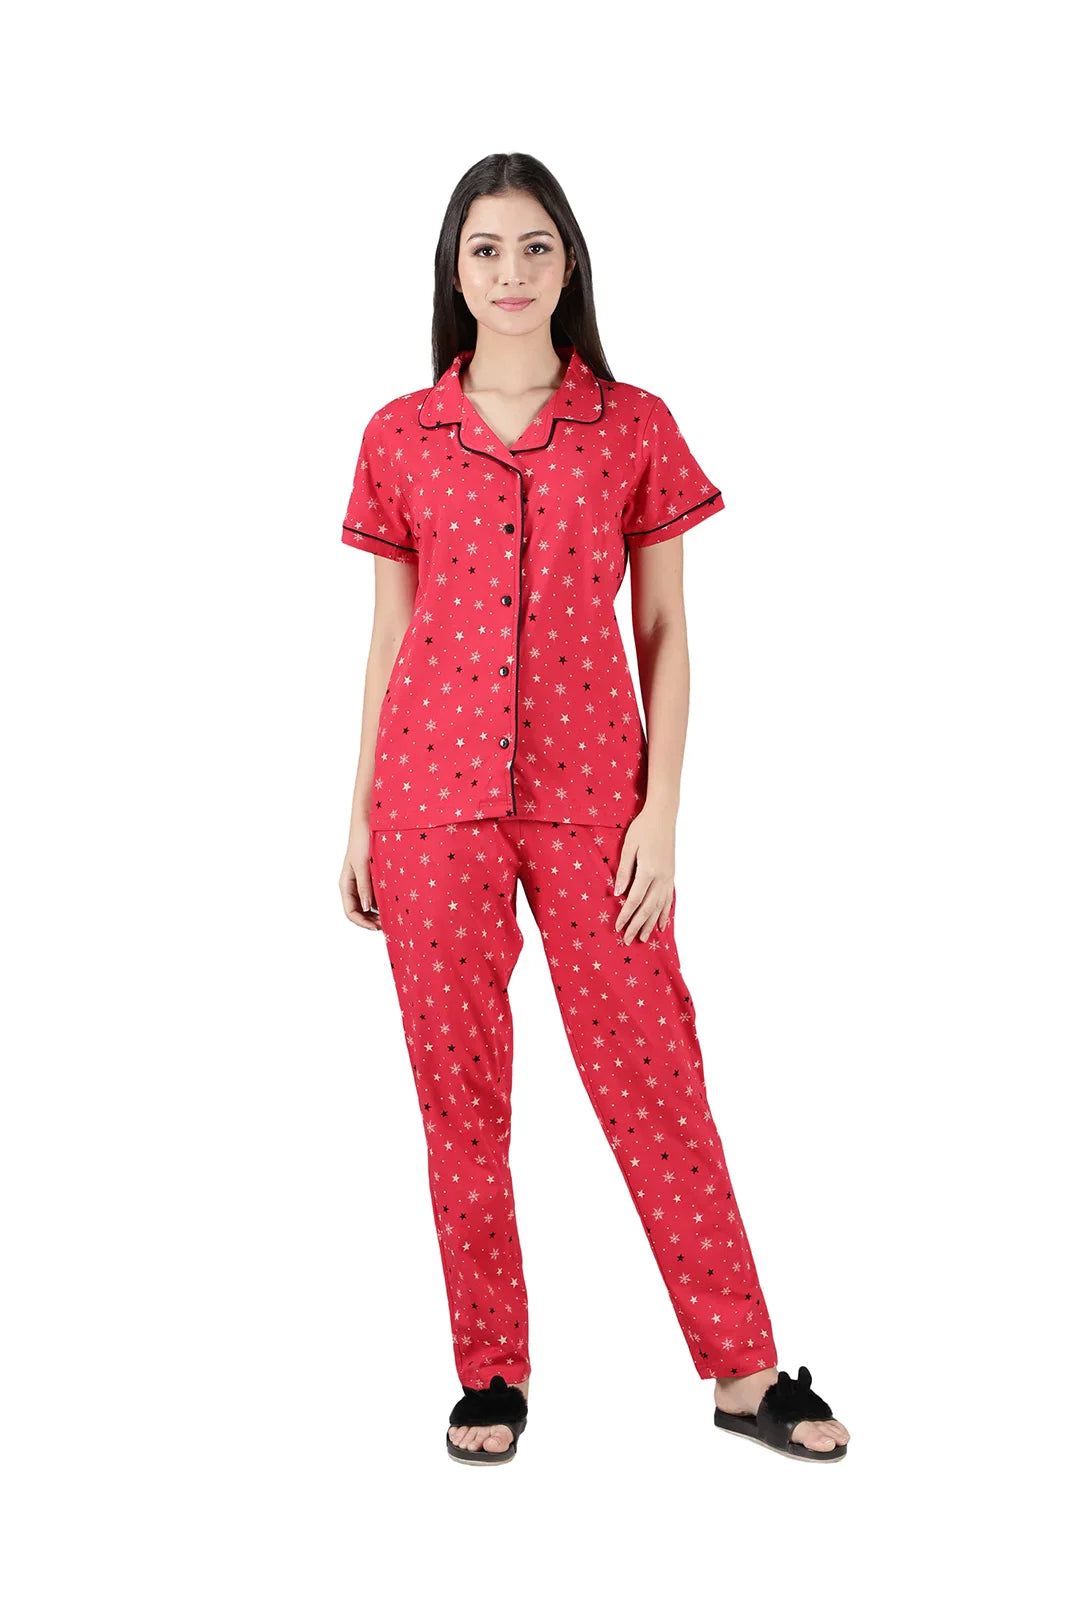 Red Star Printed Cotton Women’s Nightwear Co-ord Set